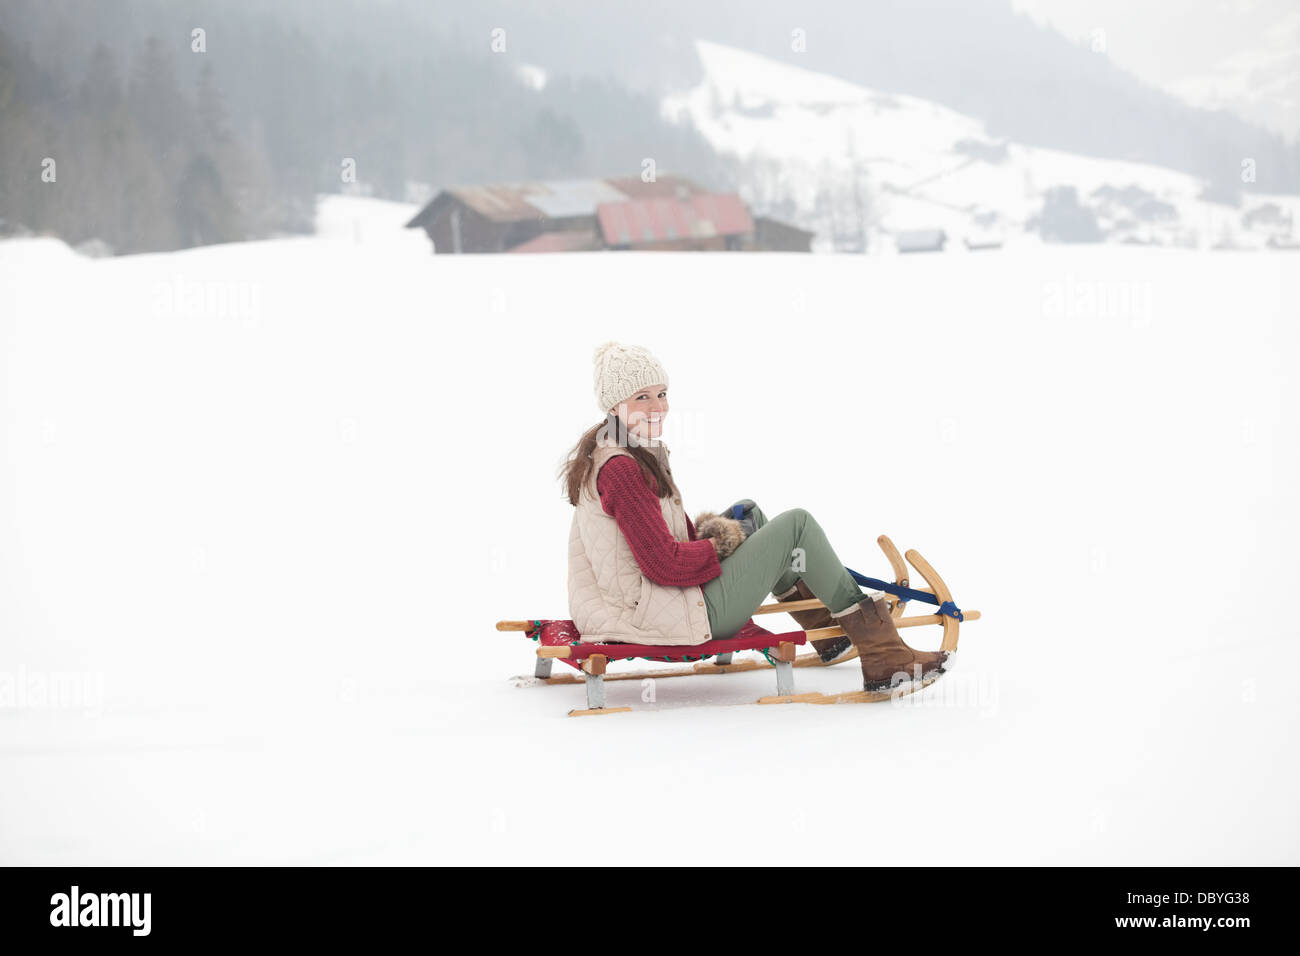 Portrait of smiling woman sledding in snowy field Stock Photo